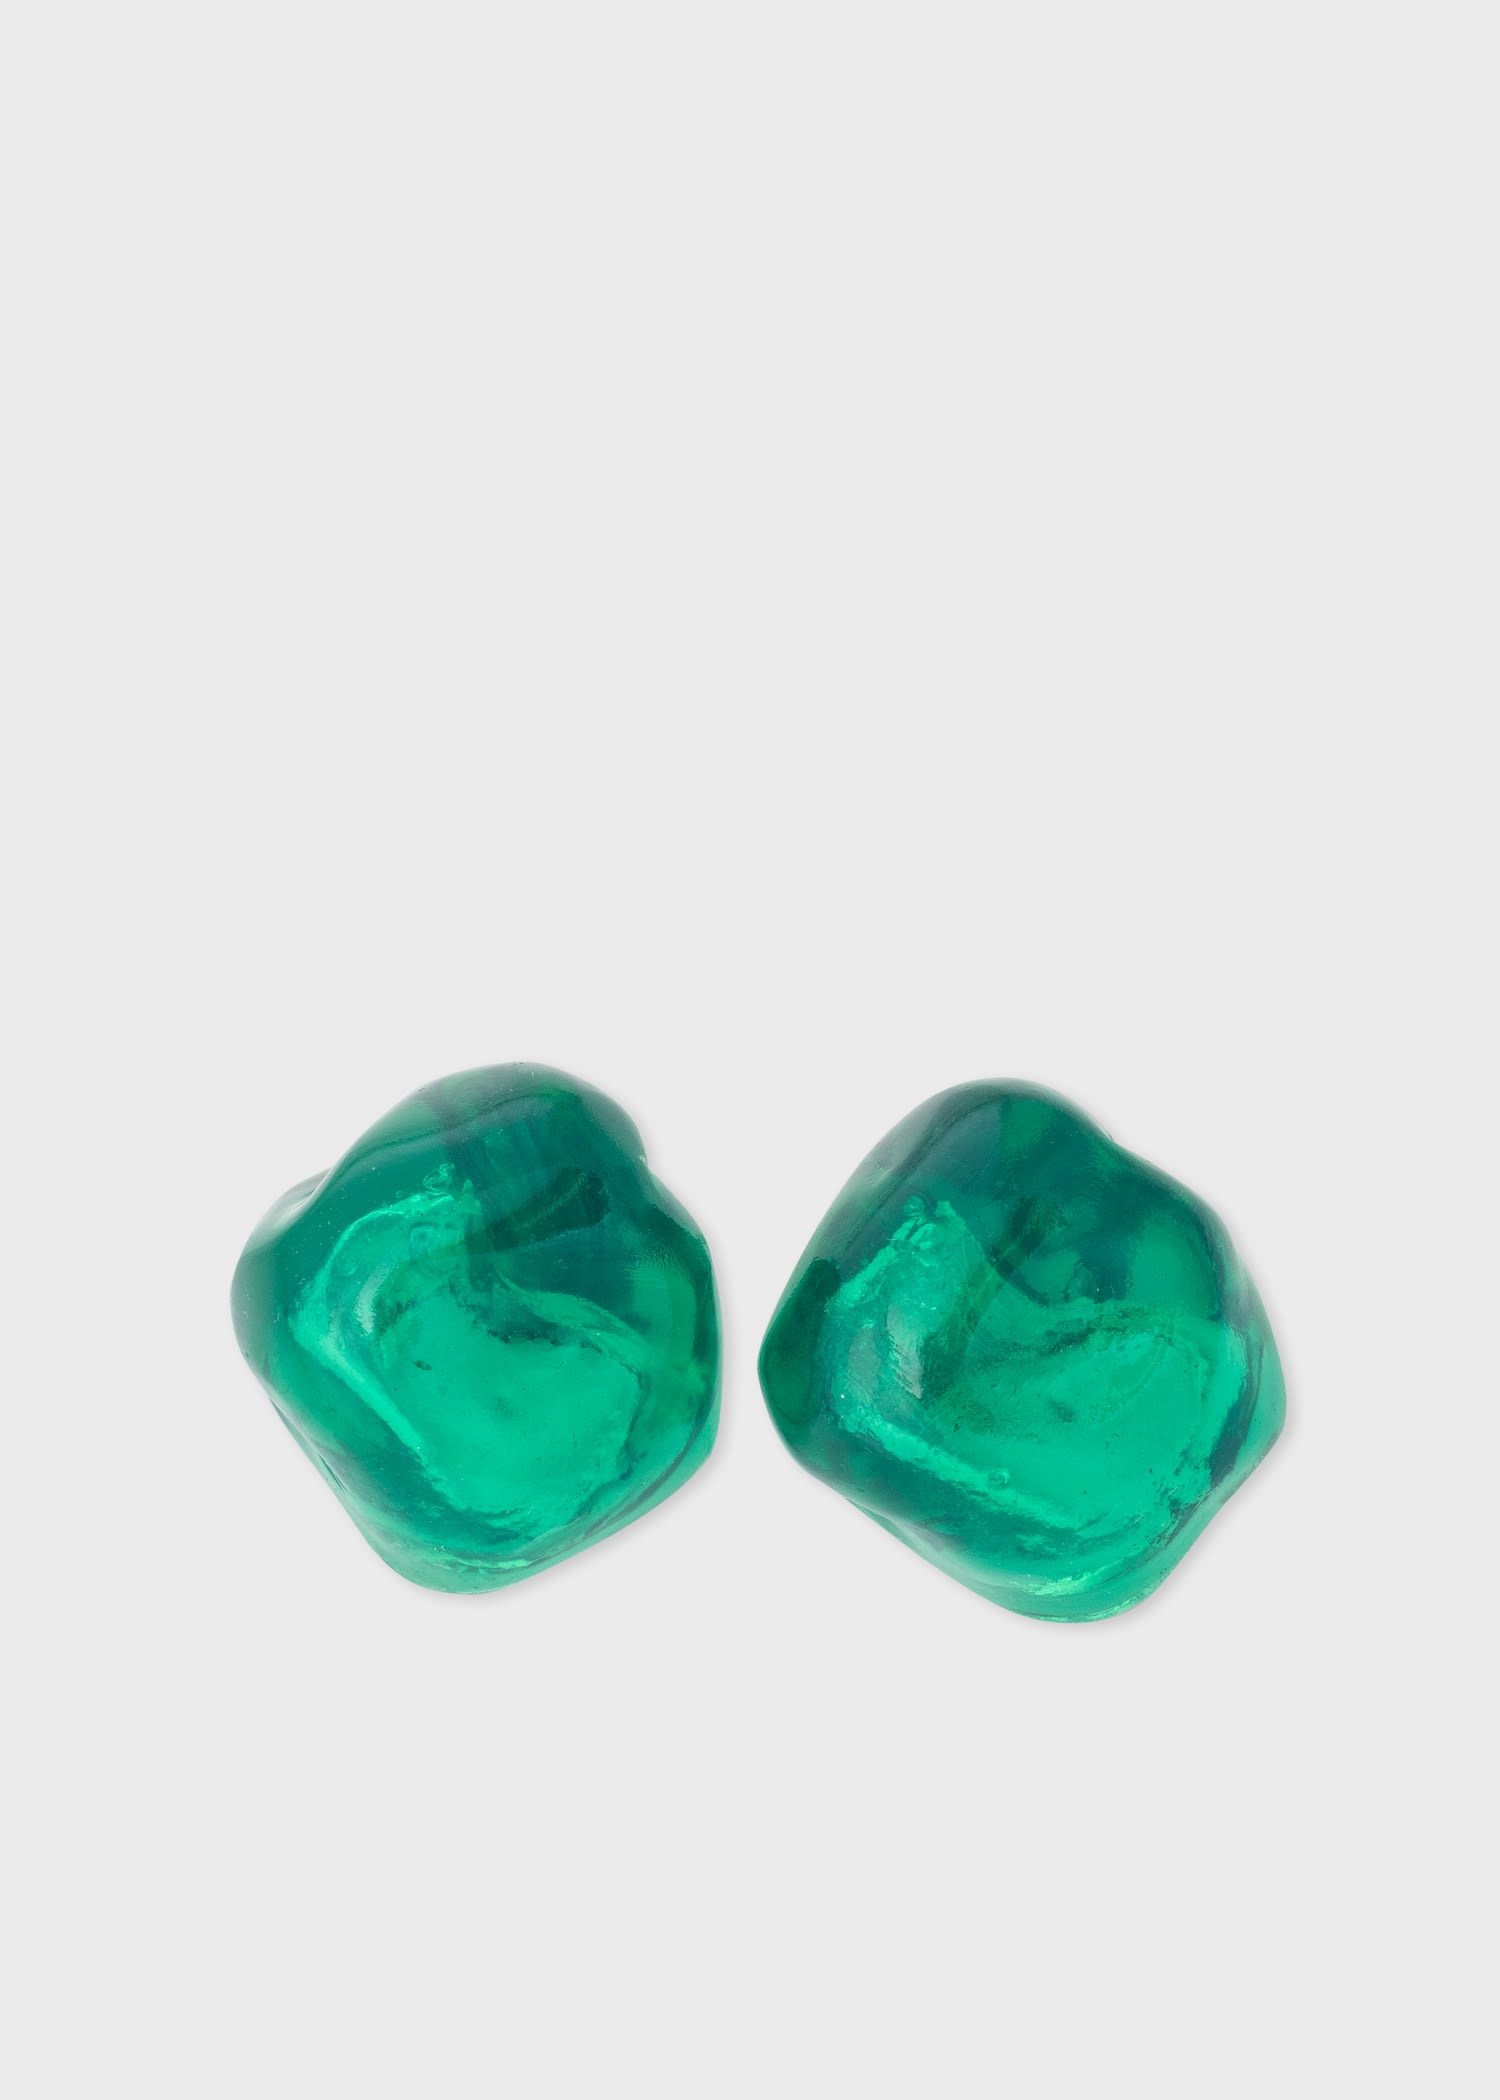 Organic Shape Bio-Resin Earrings by Completedworks - 1